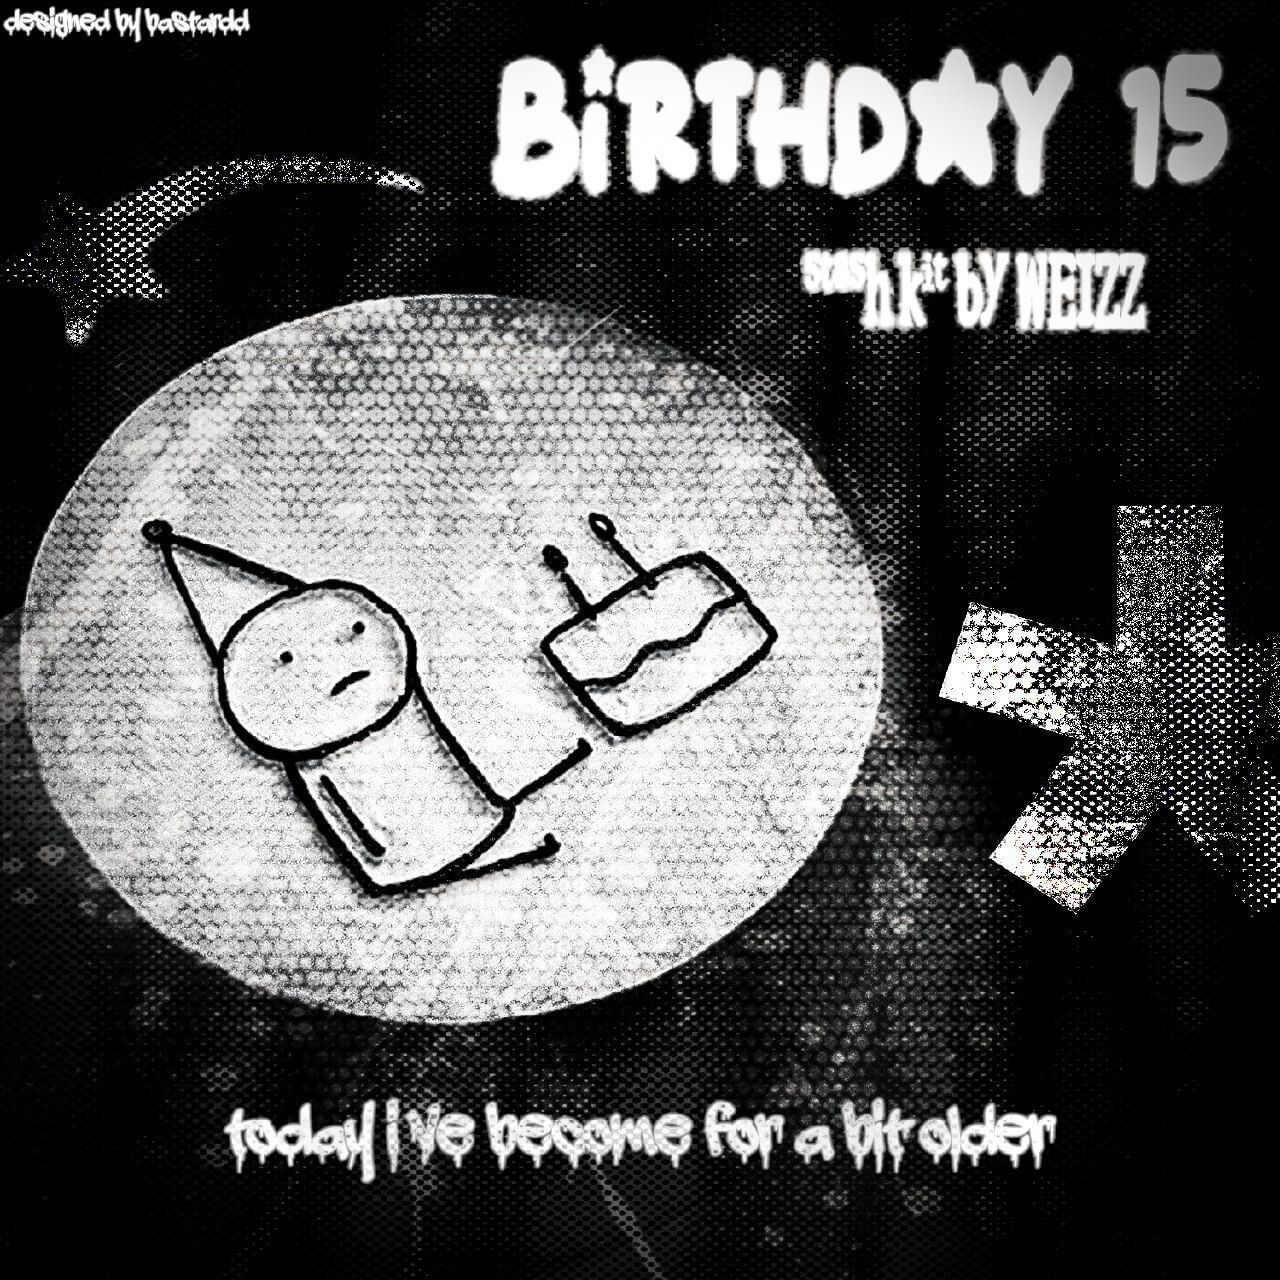 weizzbeats - Birthday 15 Stash Kit